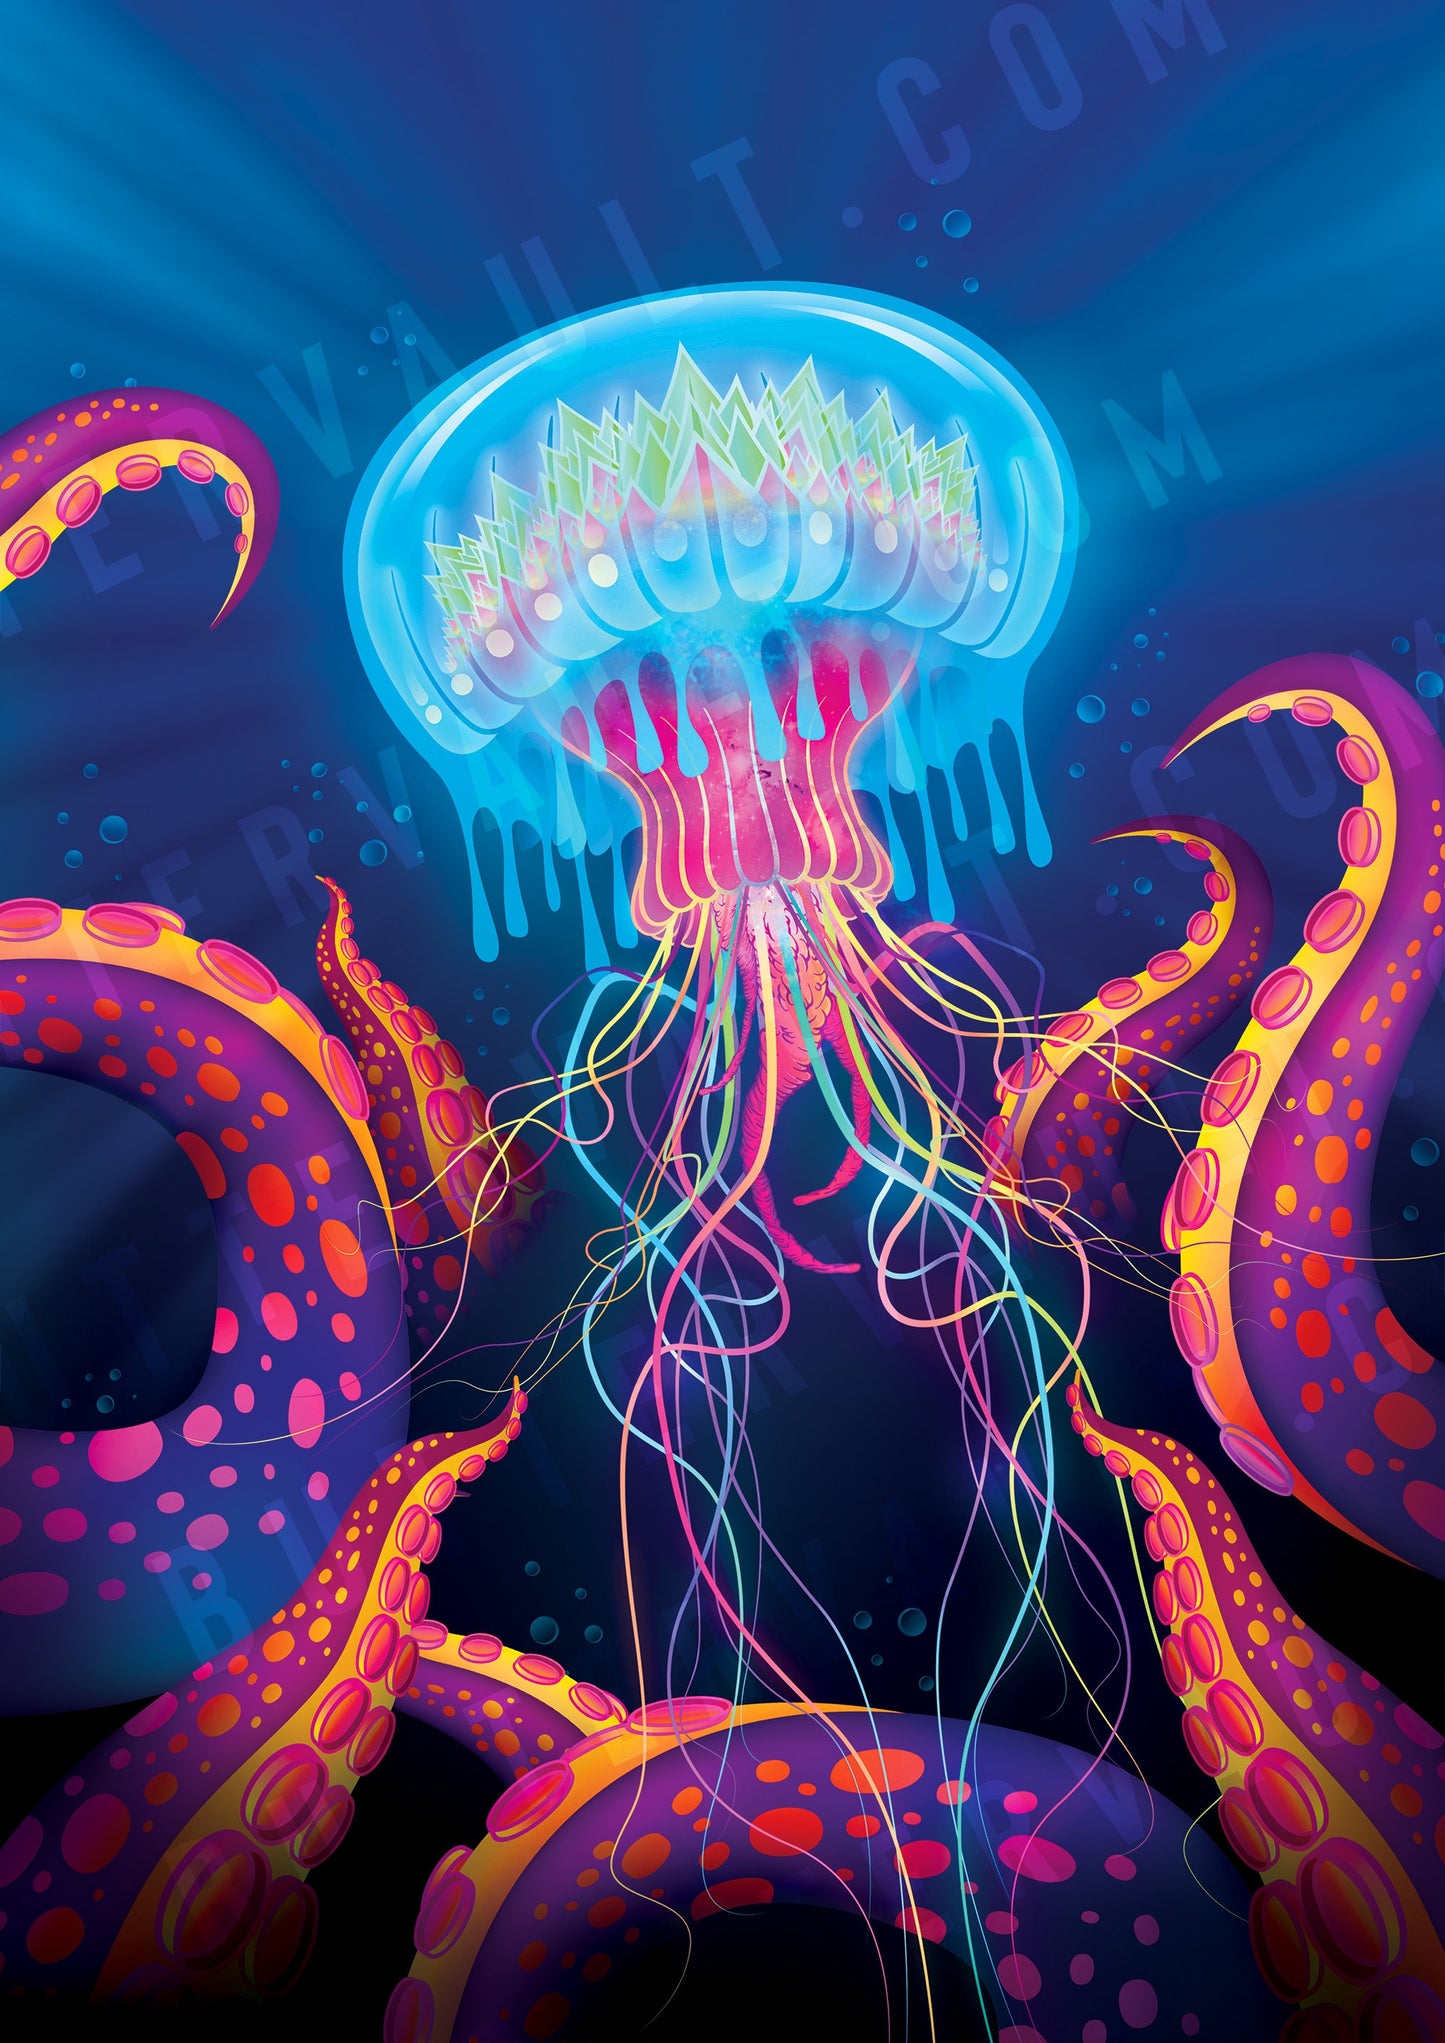 Jellyfish Tentacles - Canvas Print